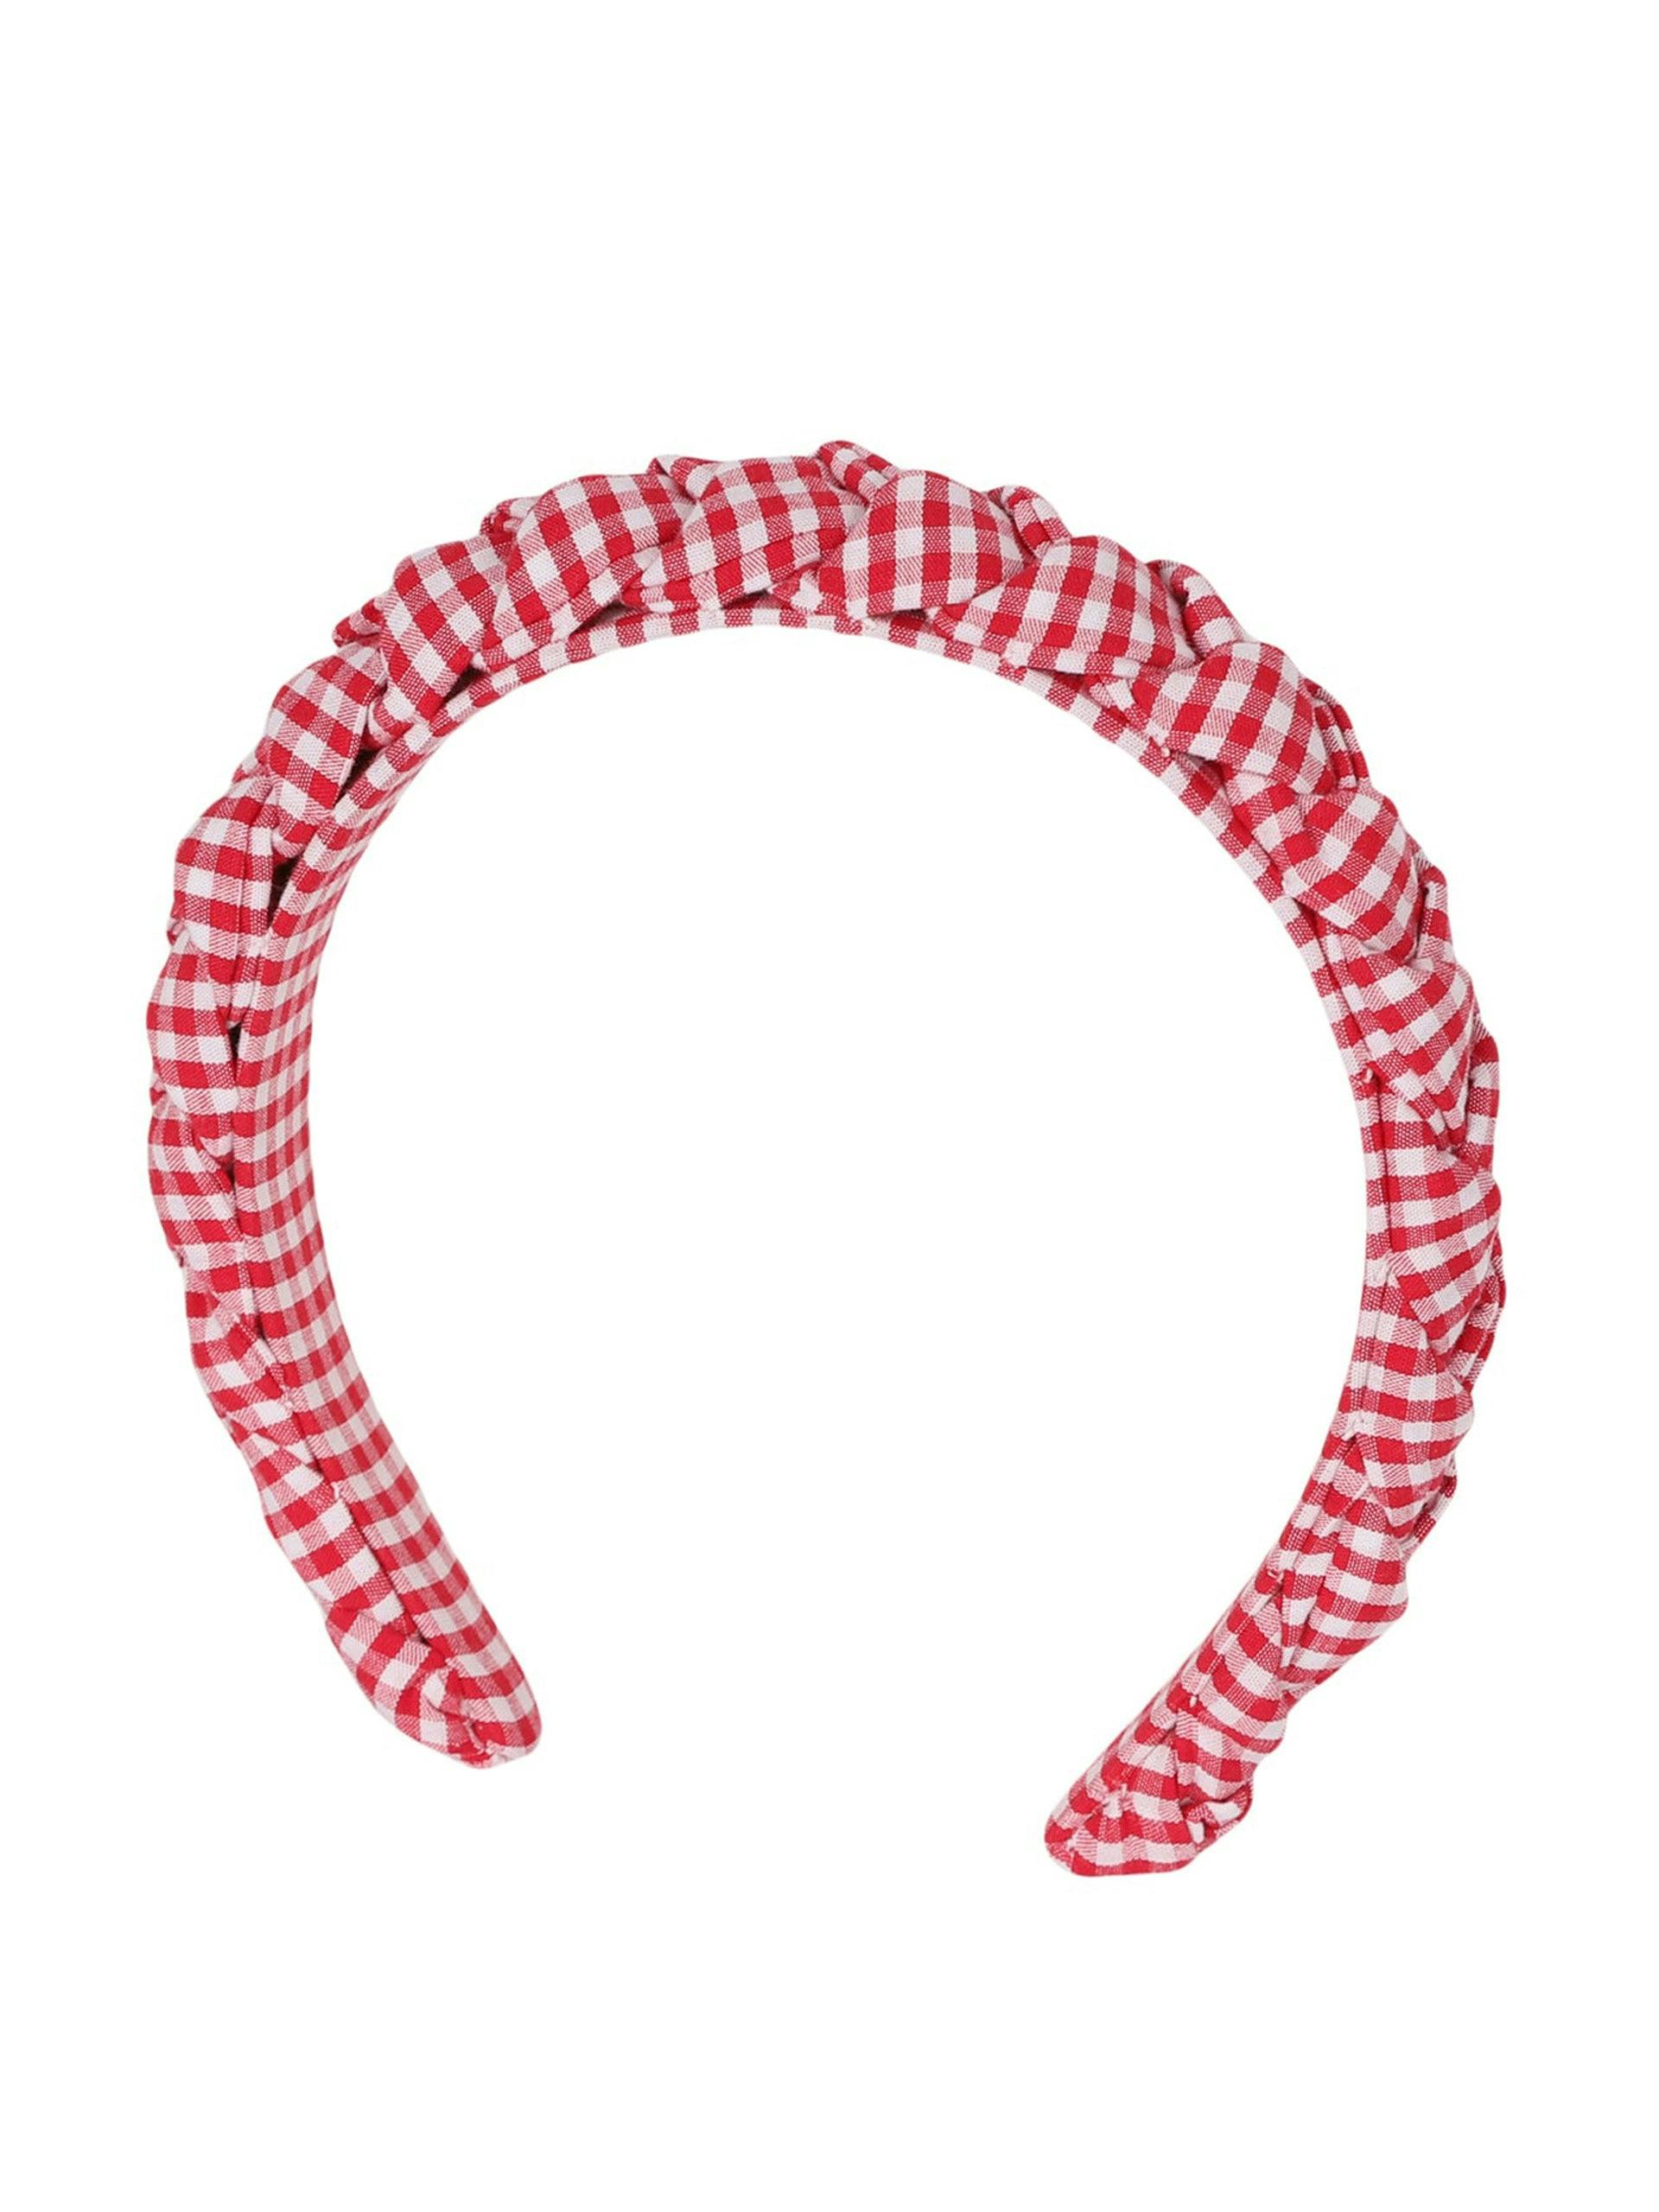 Red gingham braided headband